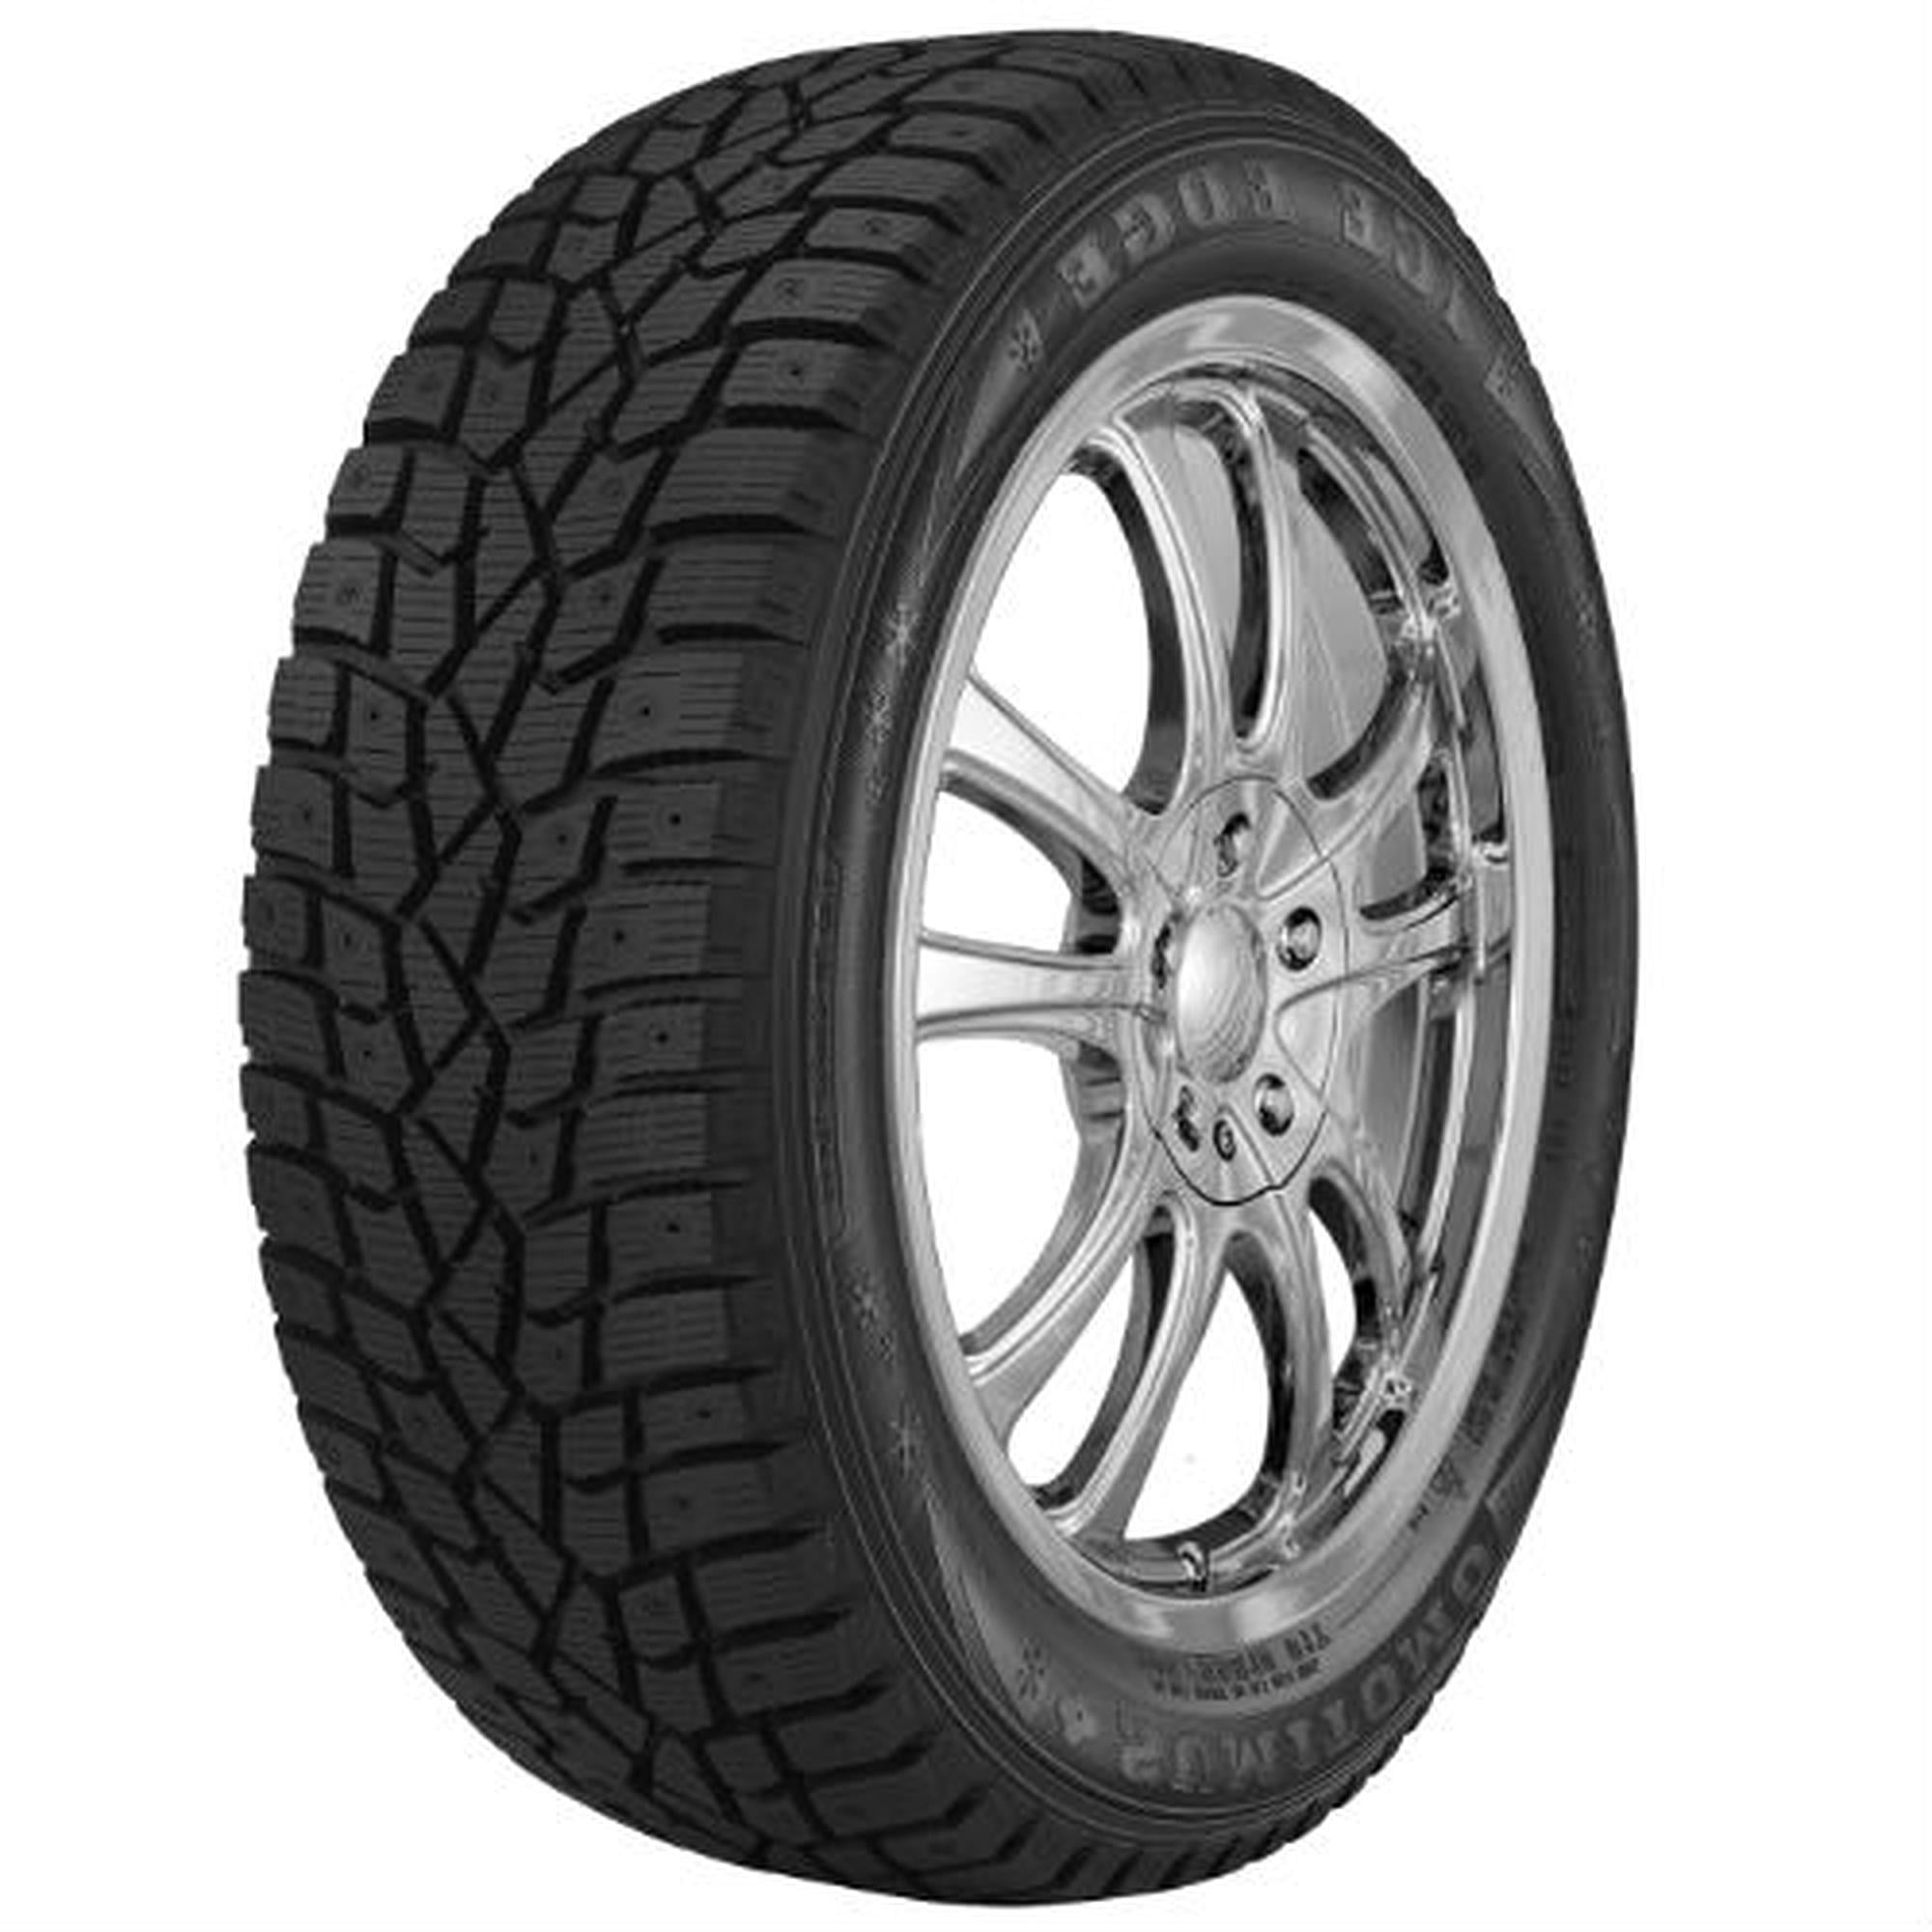 Bridgestone Blizzak WS90 195/55R16 87H (Studless) Snow Winter Tire